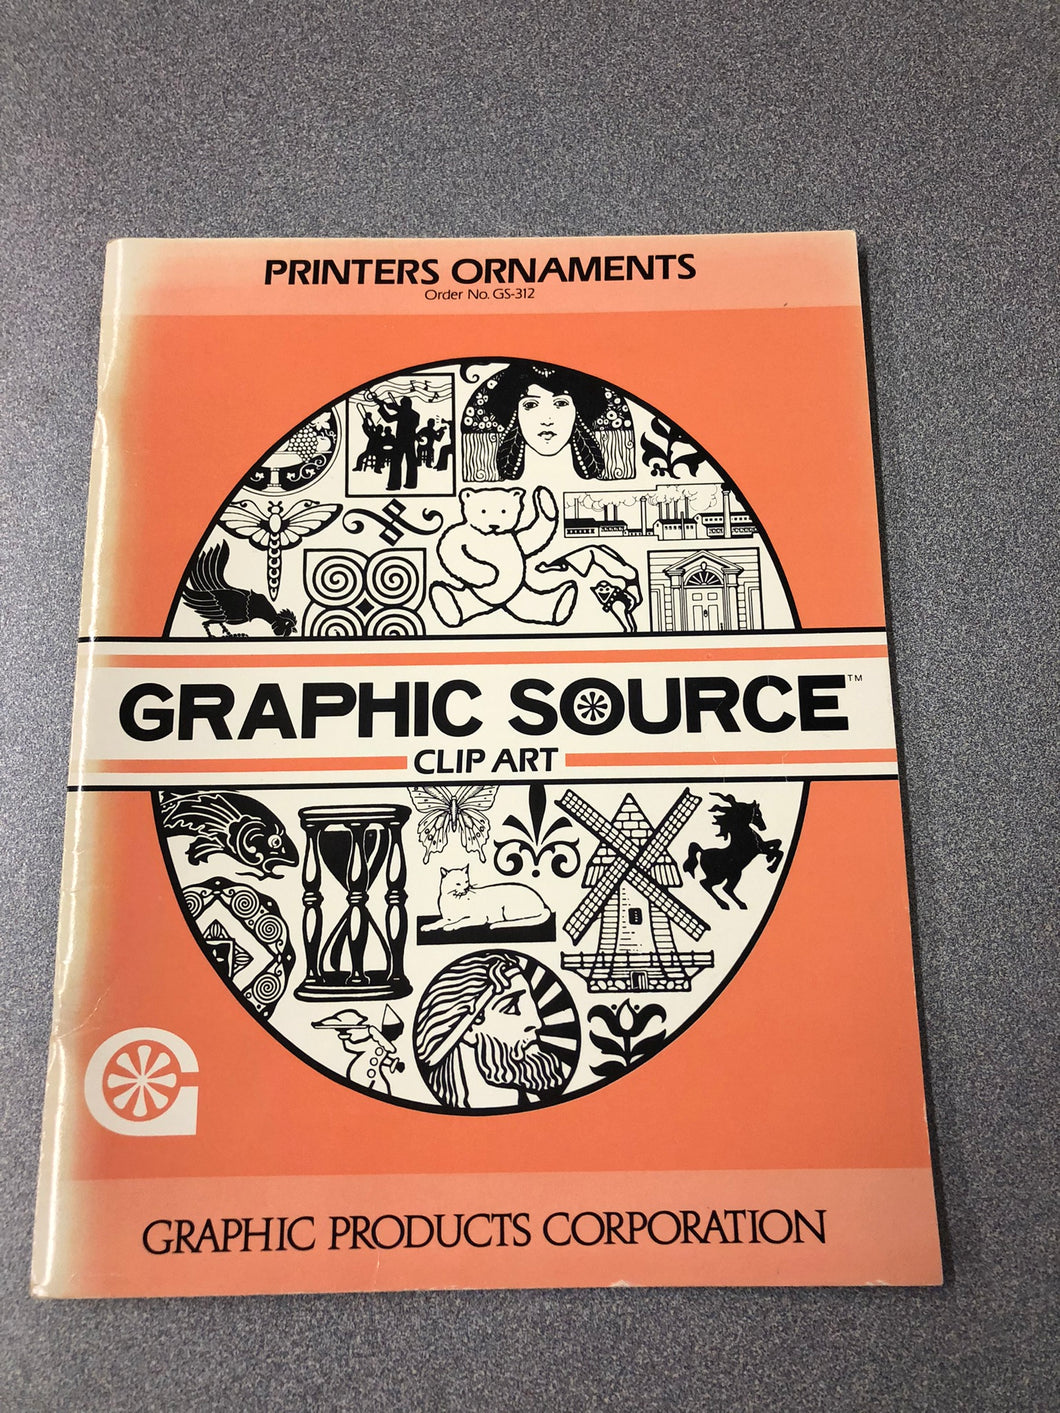 Printers Ornaments: Graphic Source Clip Art [1986] CG 5/22